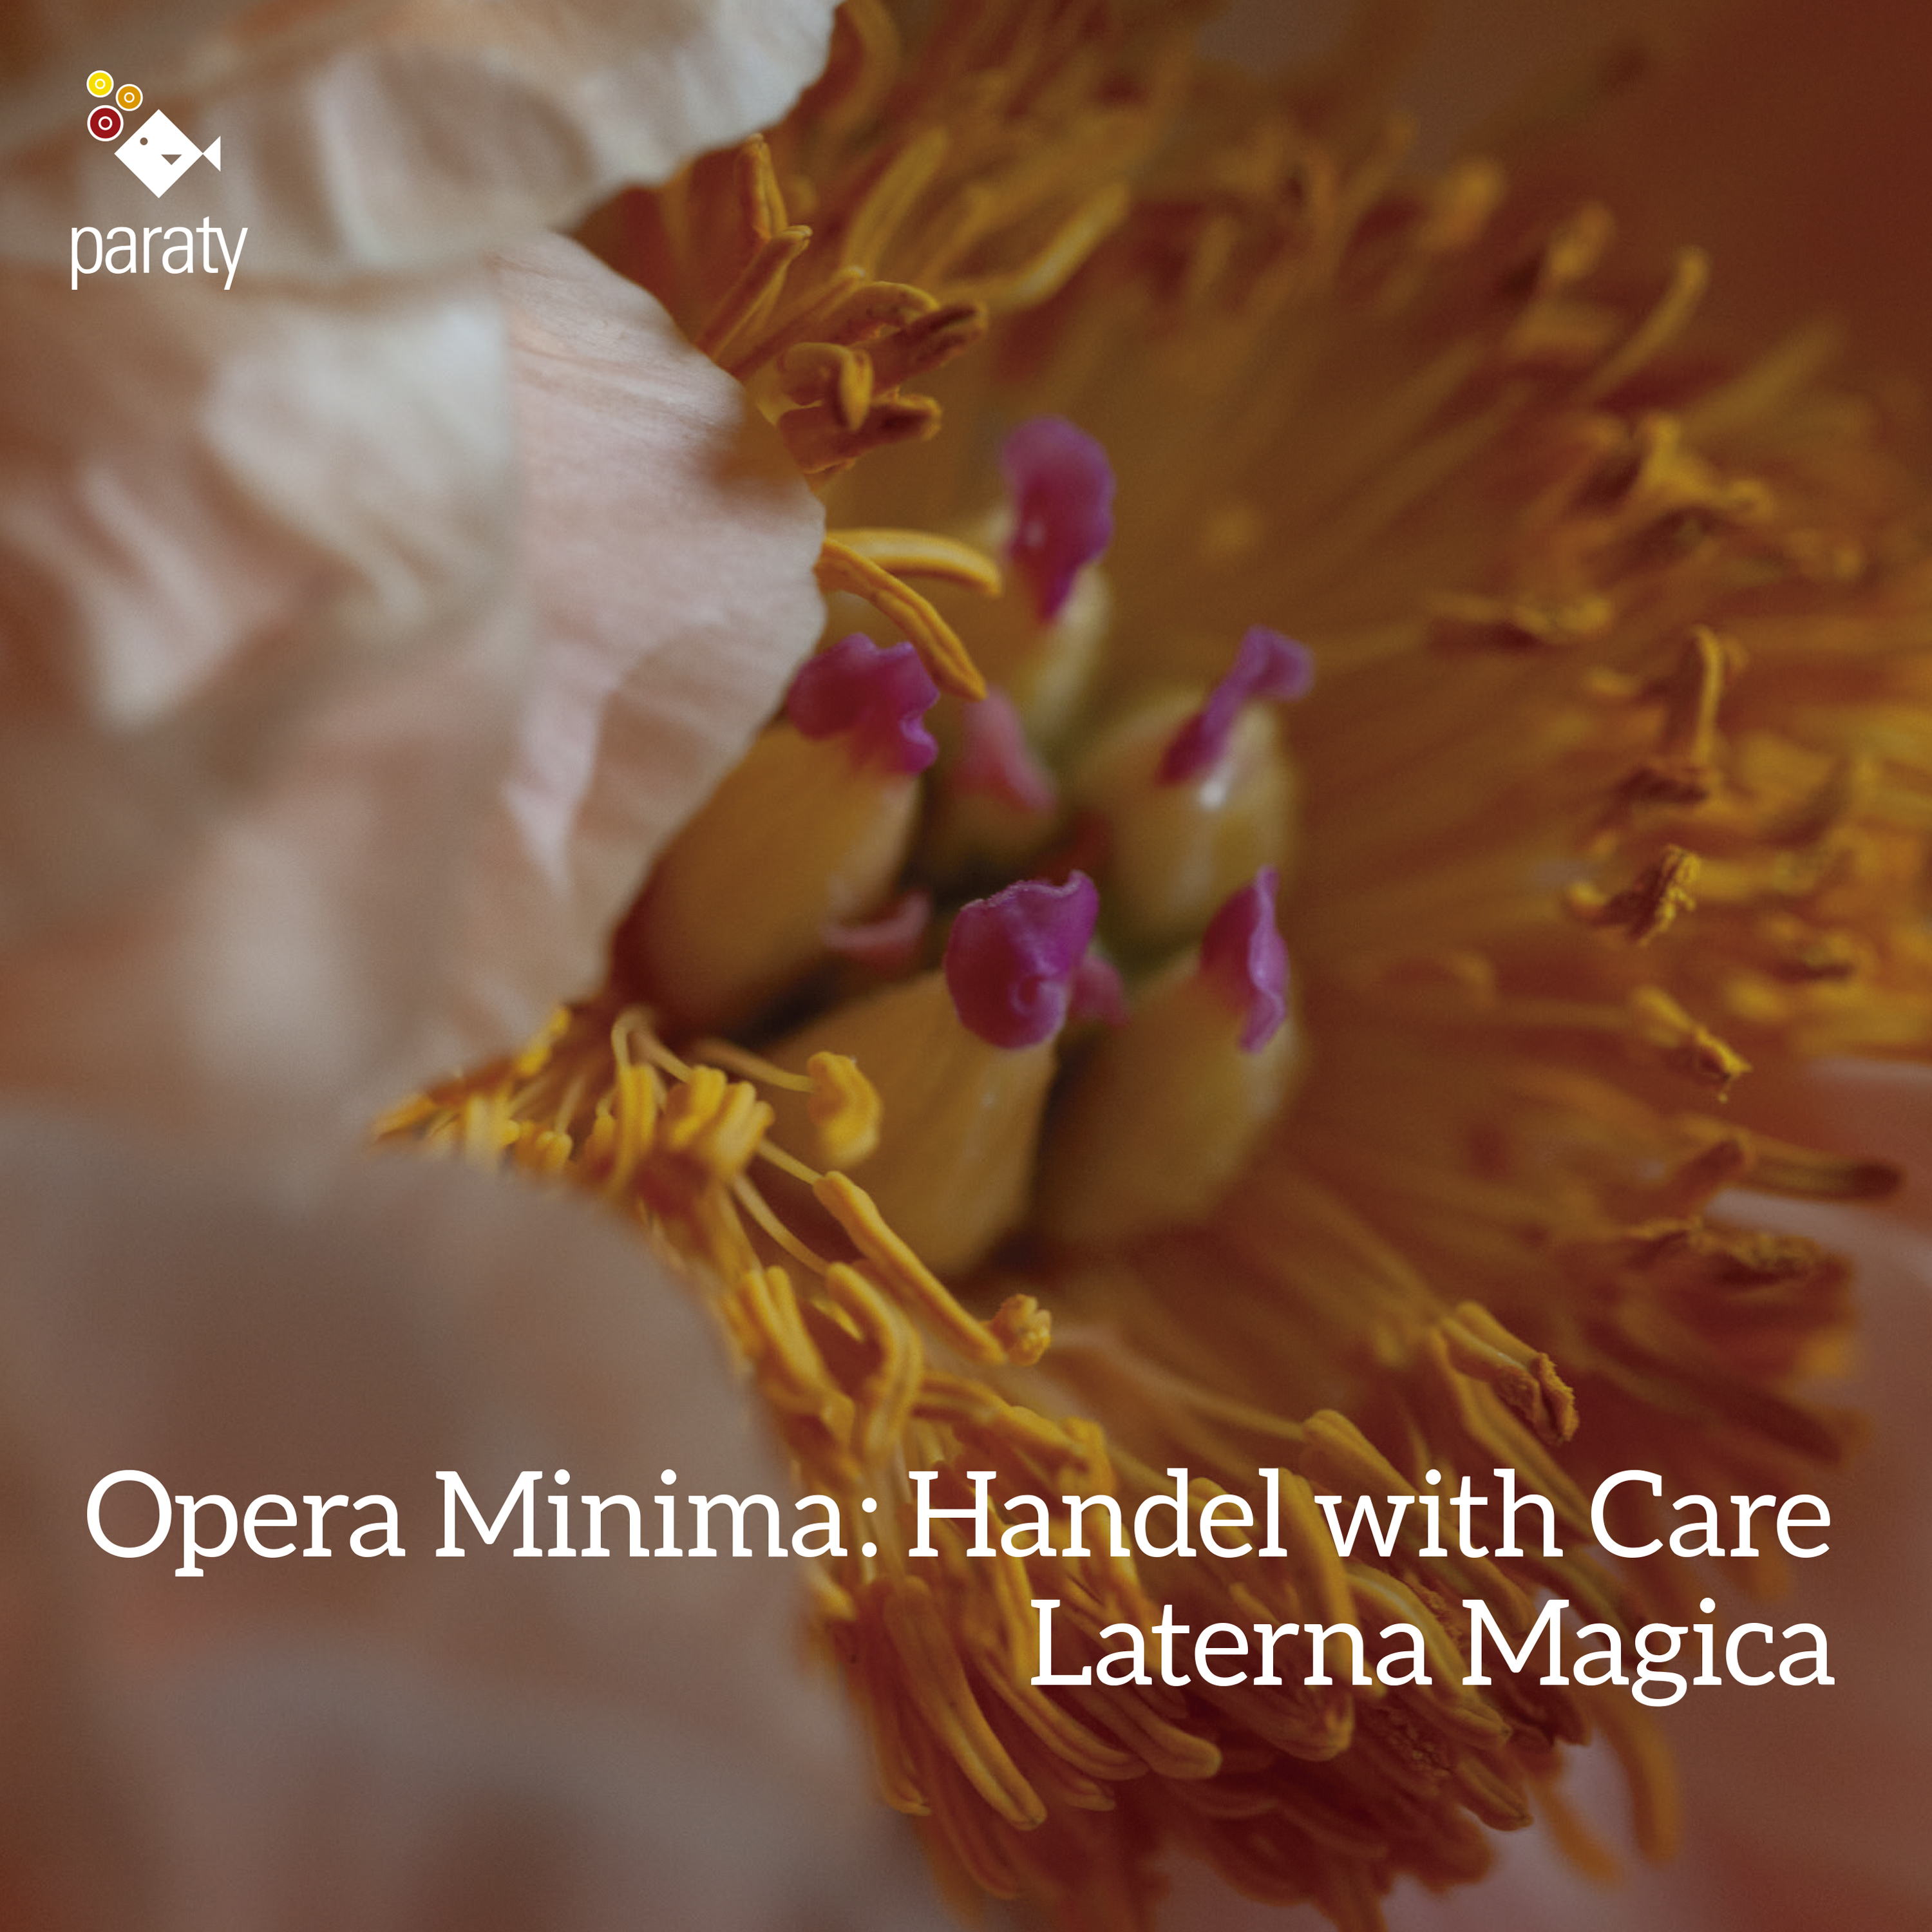 Opera Minima: Handel with Care